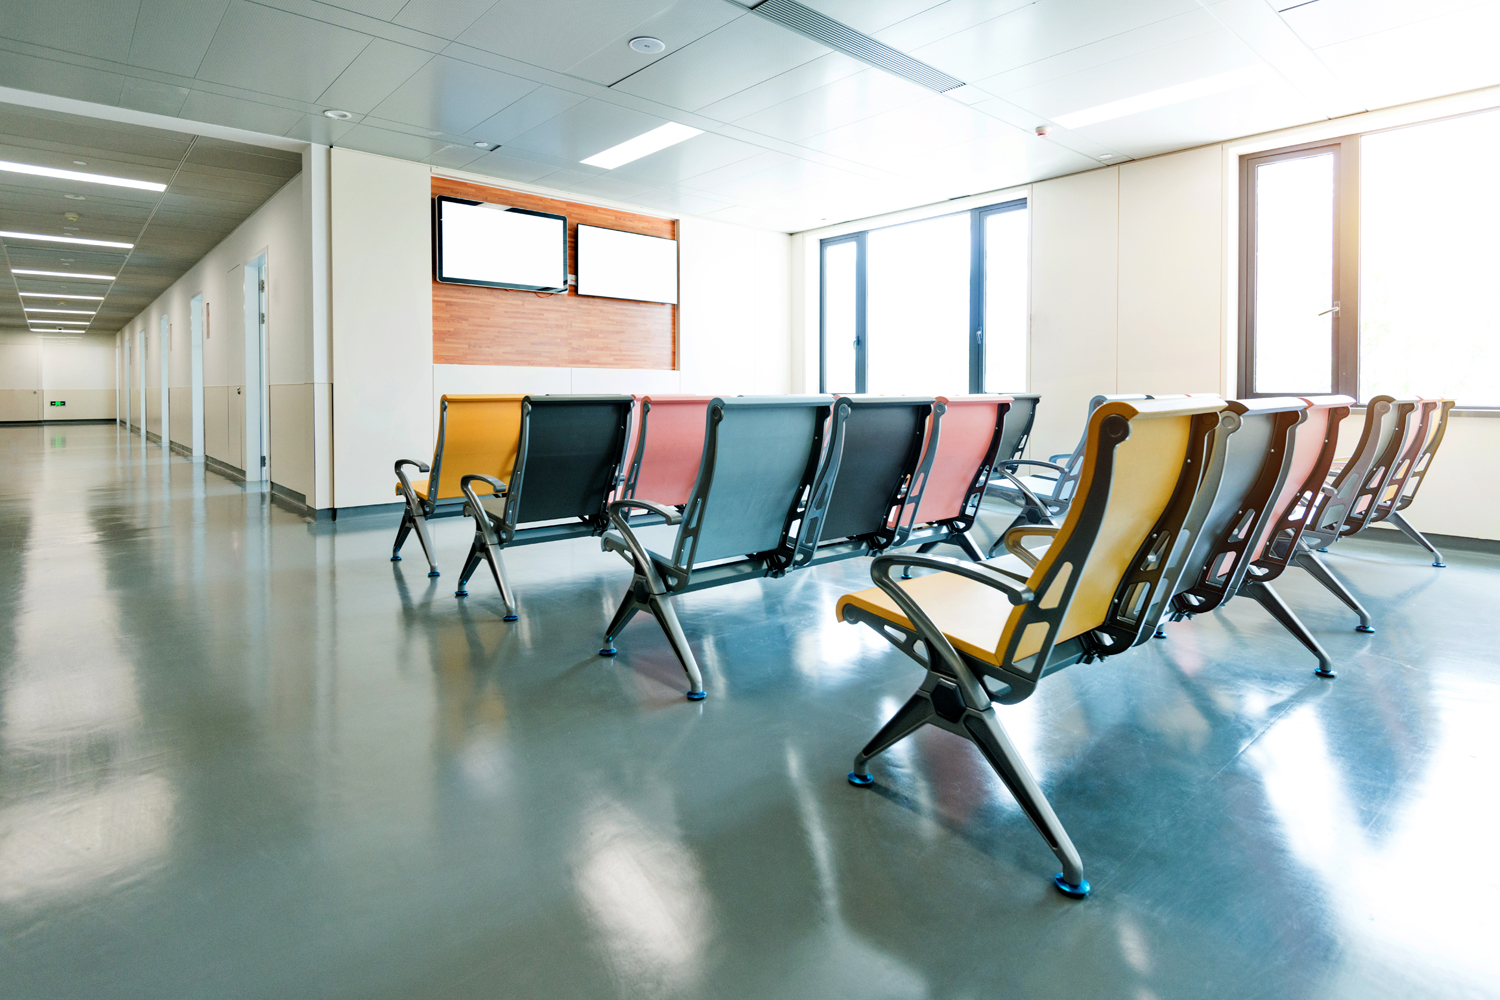 Waiting Area TV in Hospitals, Clinics - Medical Waiting Room TV?